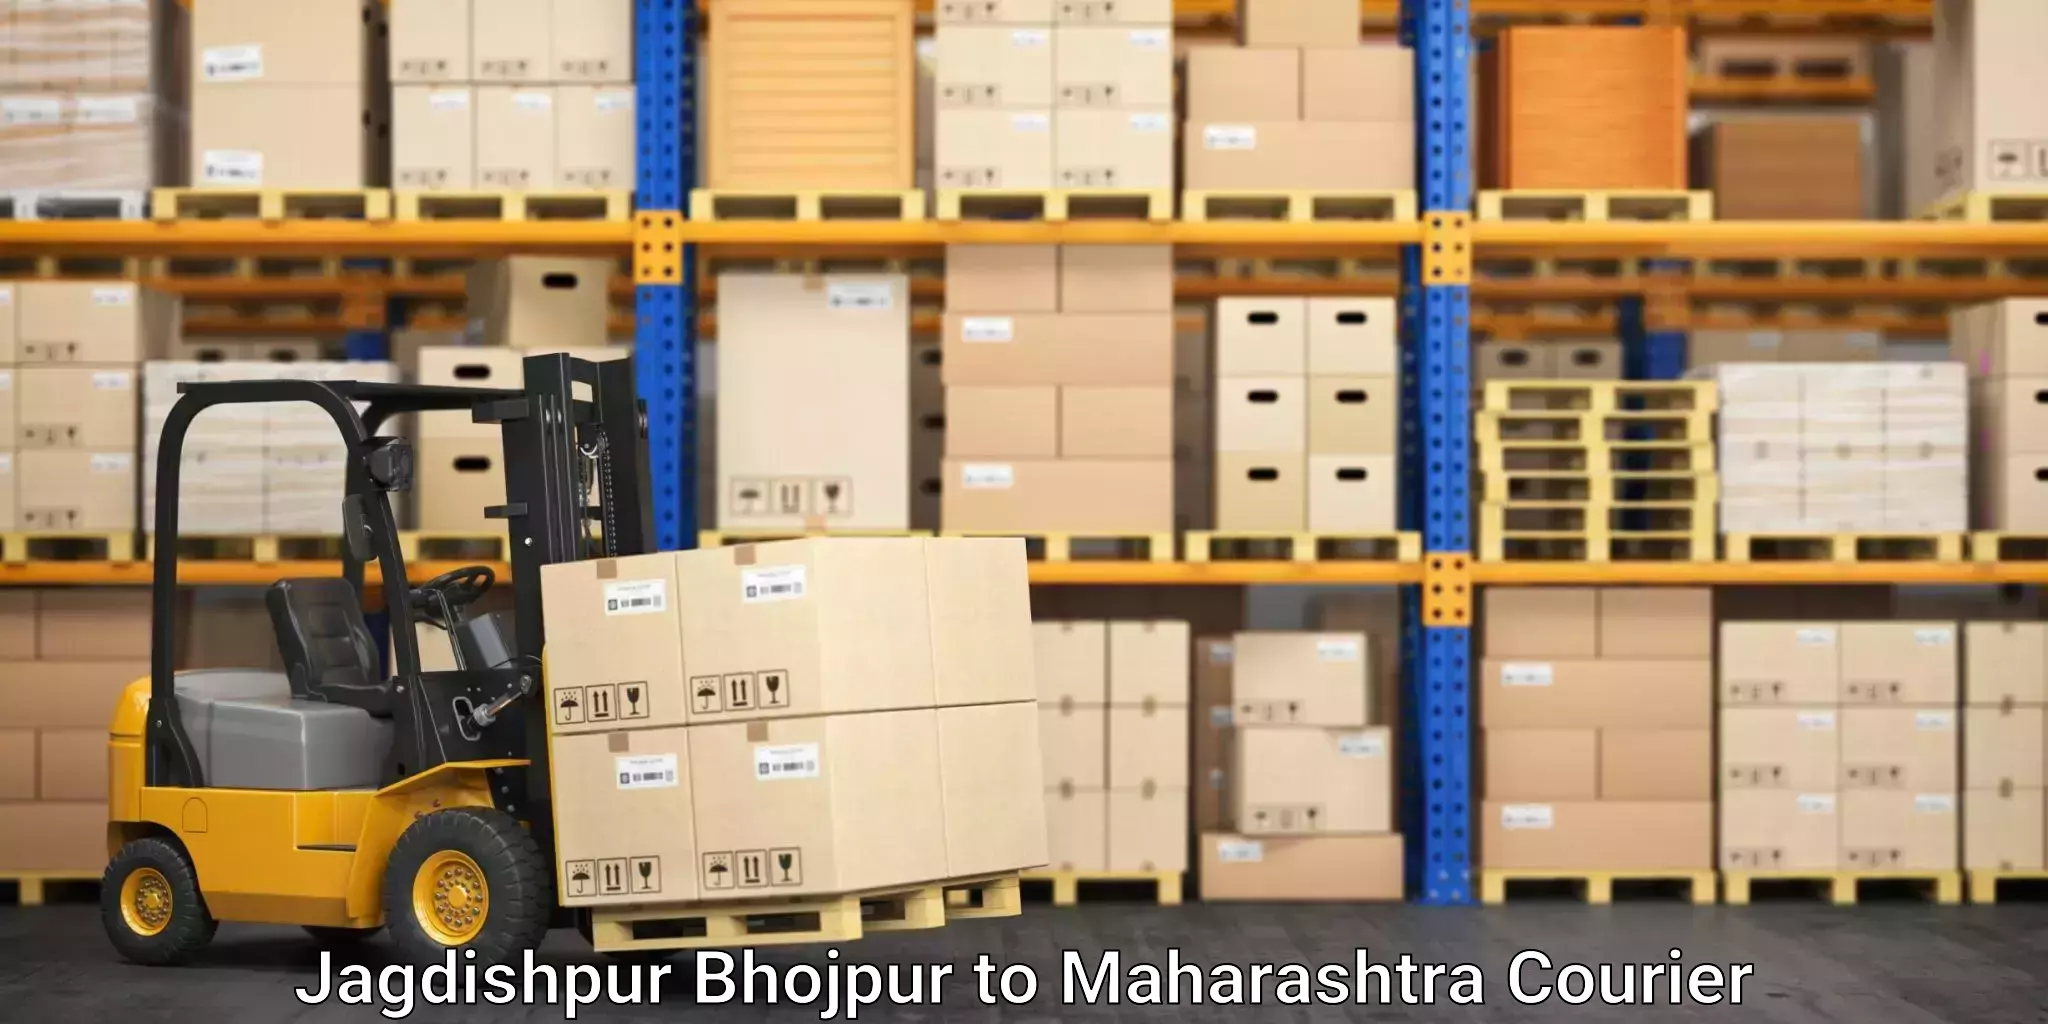 Moving and storage services Jagdishpur Bhojpur to Palghar